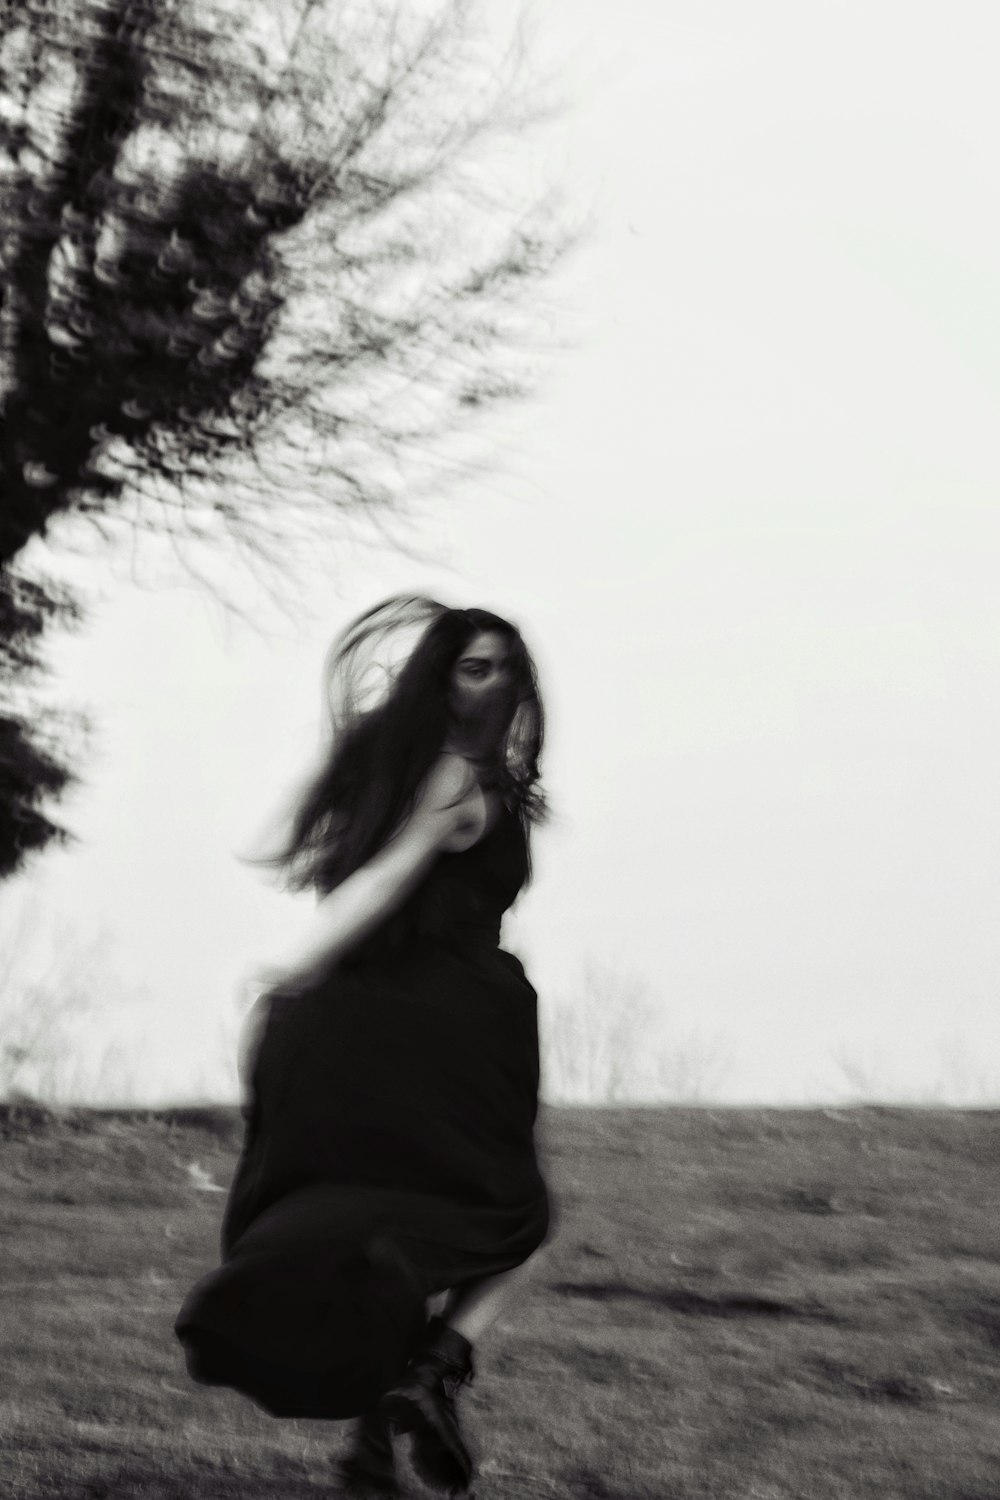 a woman in a black dress running through a field